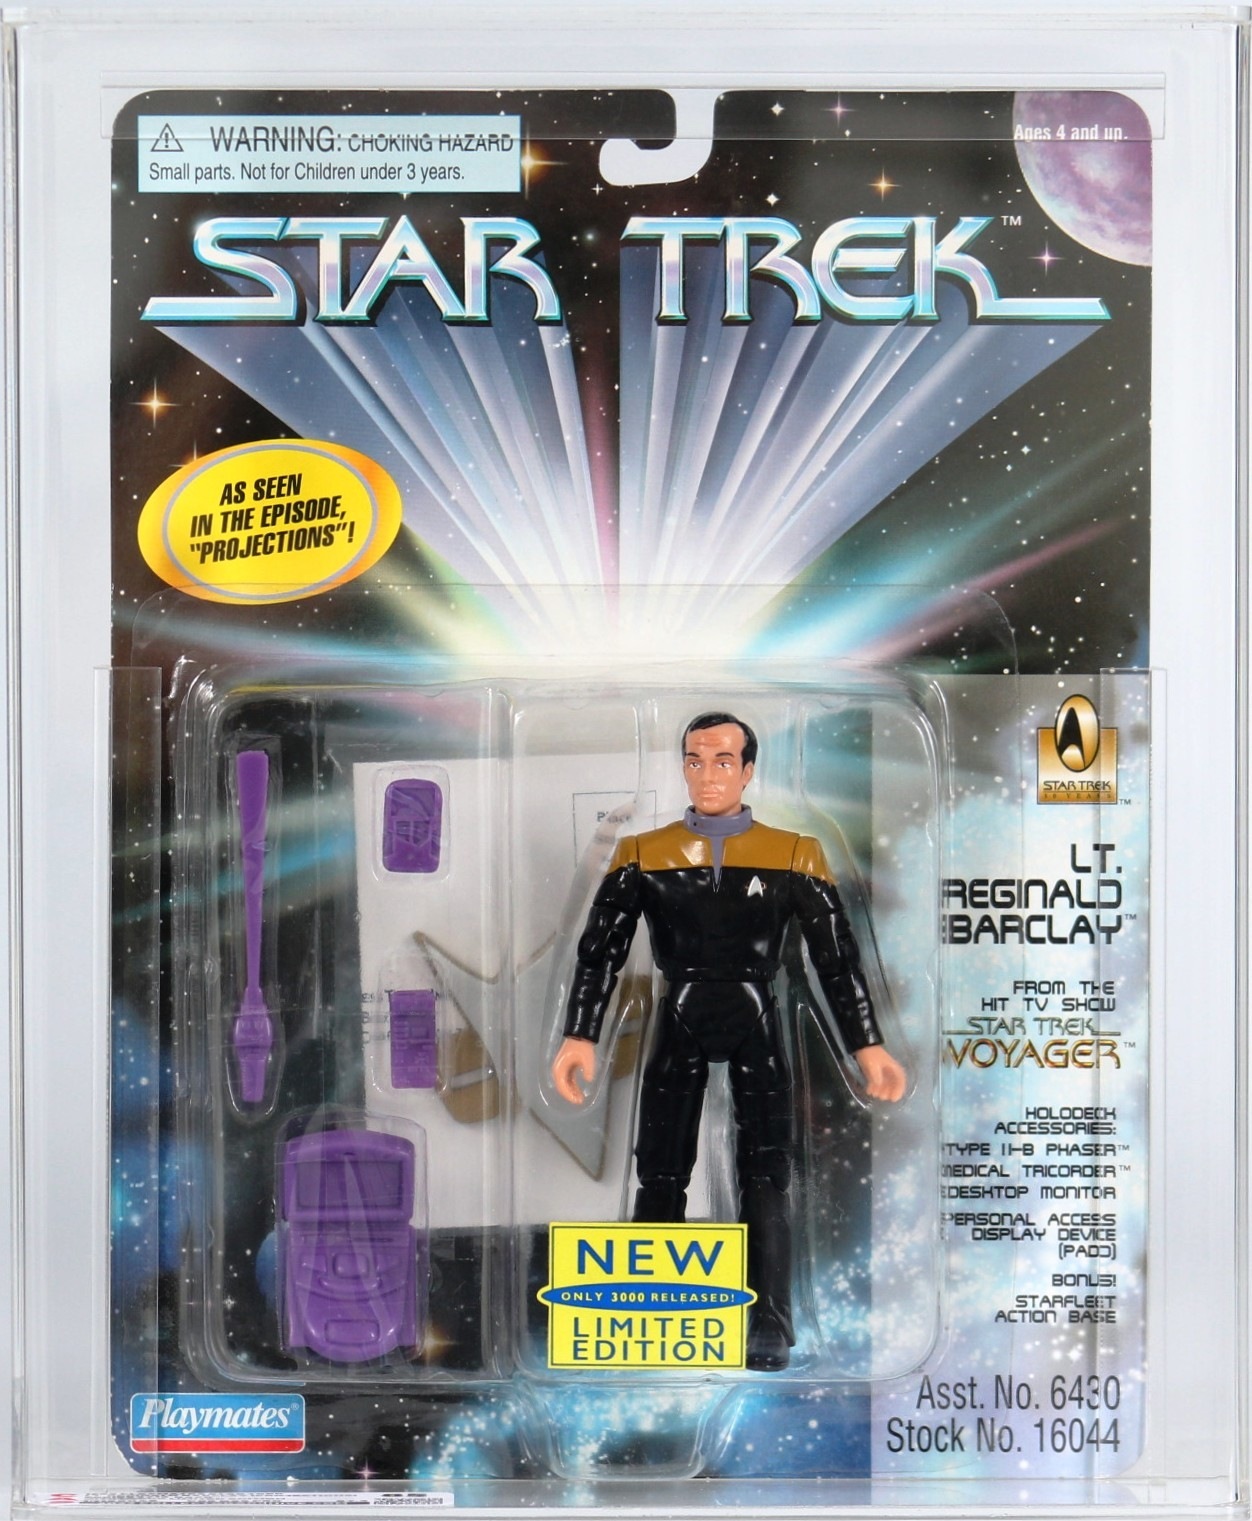 1996 Playmates Star Trek Figure Carded Action Figure - Lt. Reginald Barclay